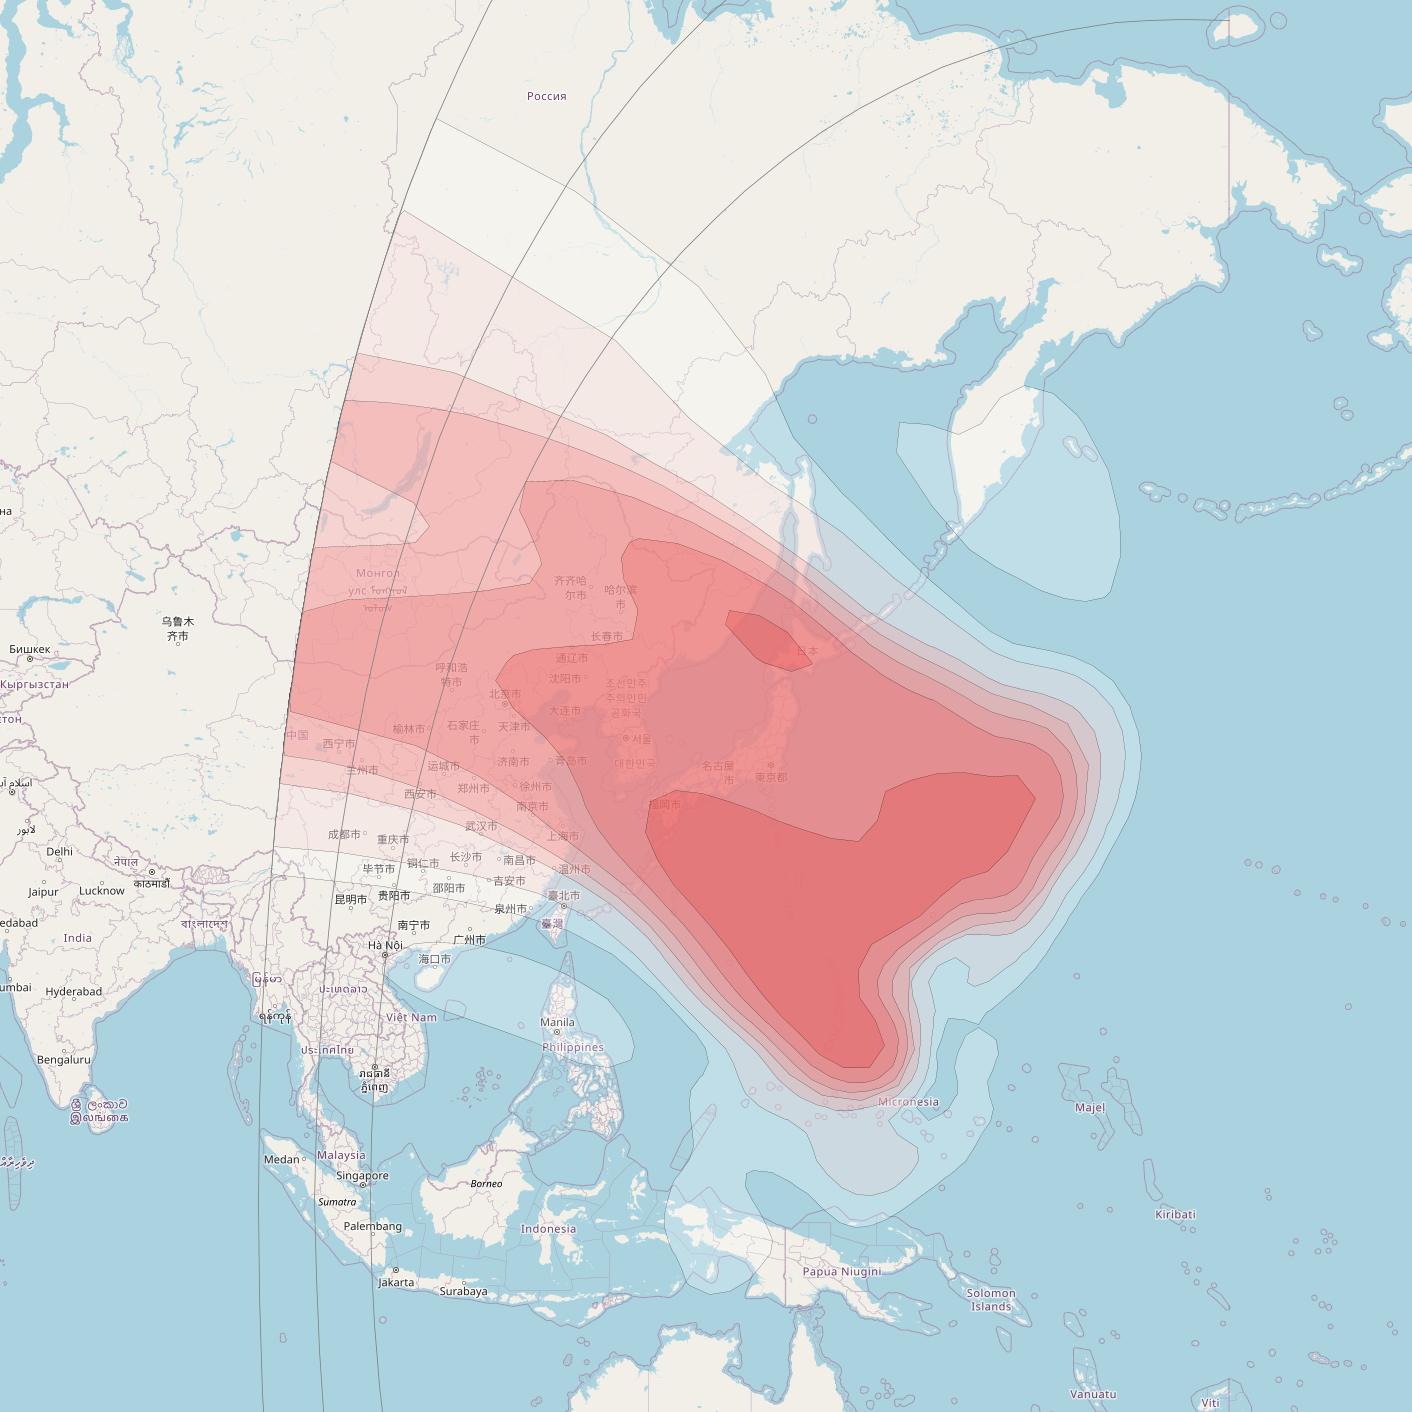 NSS 11 at 176° E downlink Ku-band SAT (Guam, Eastern Asia) coverage map